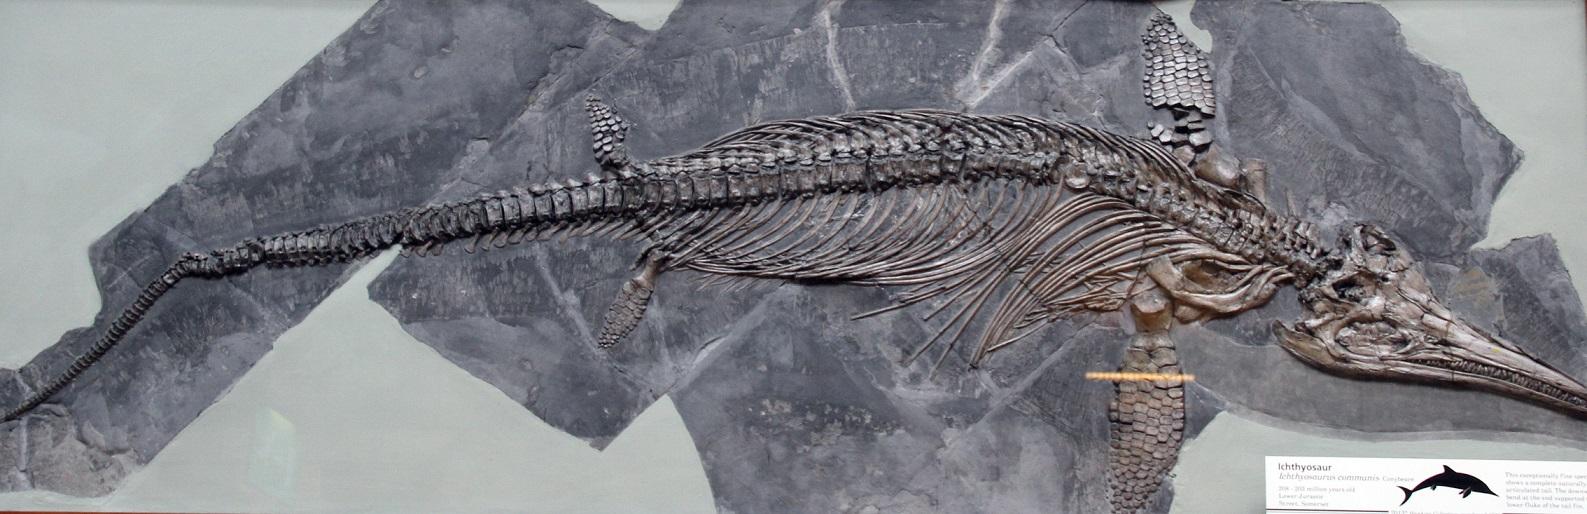 Ichthyosaurier Sea Dragon Fossil